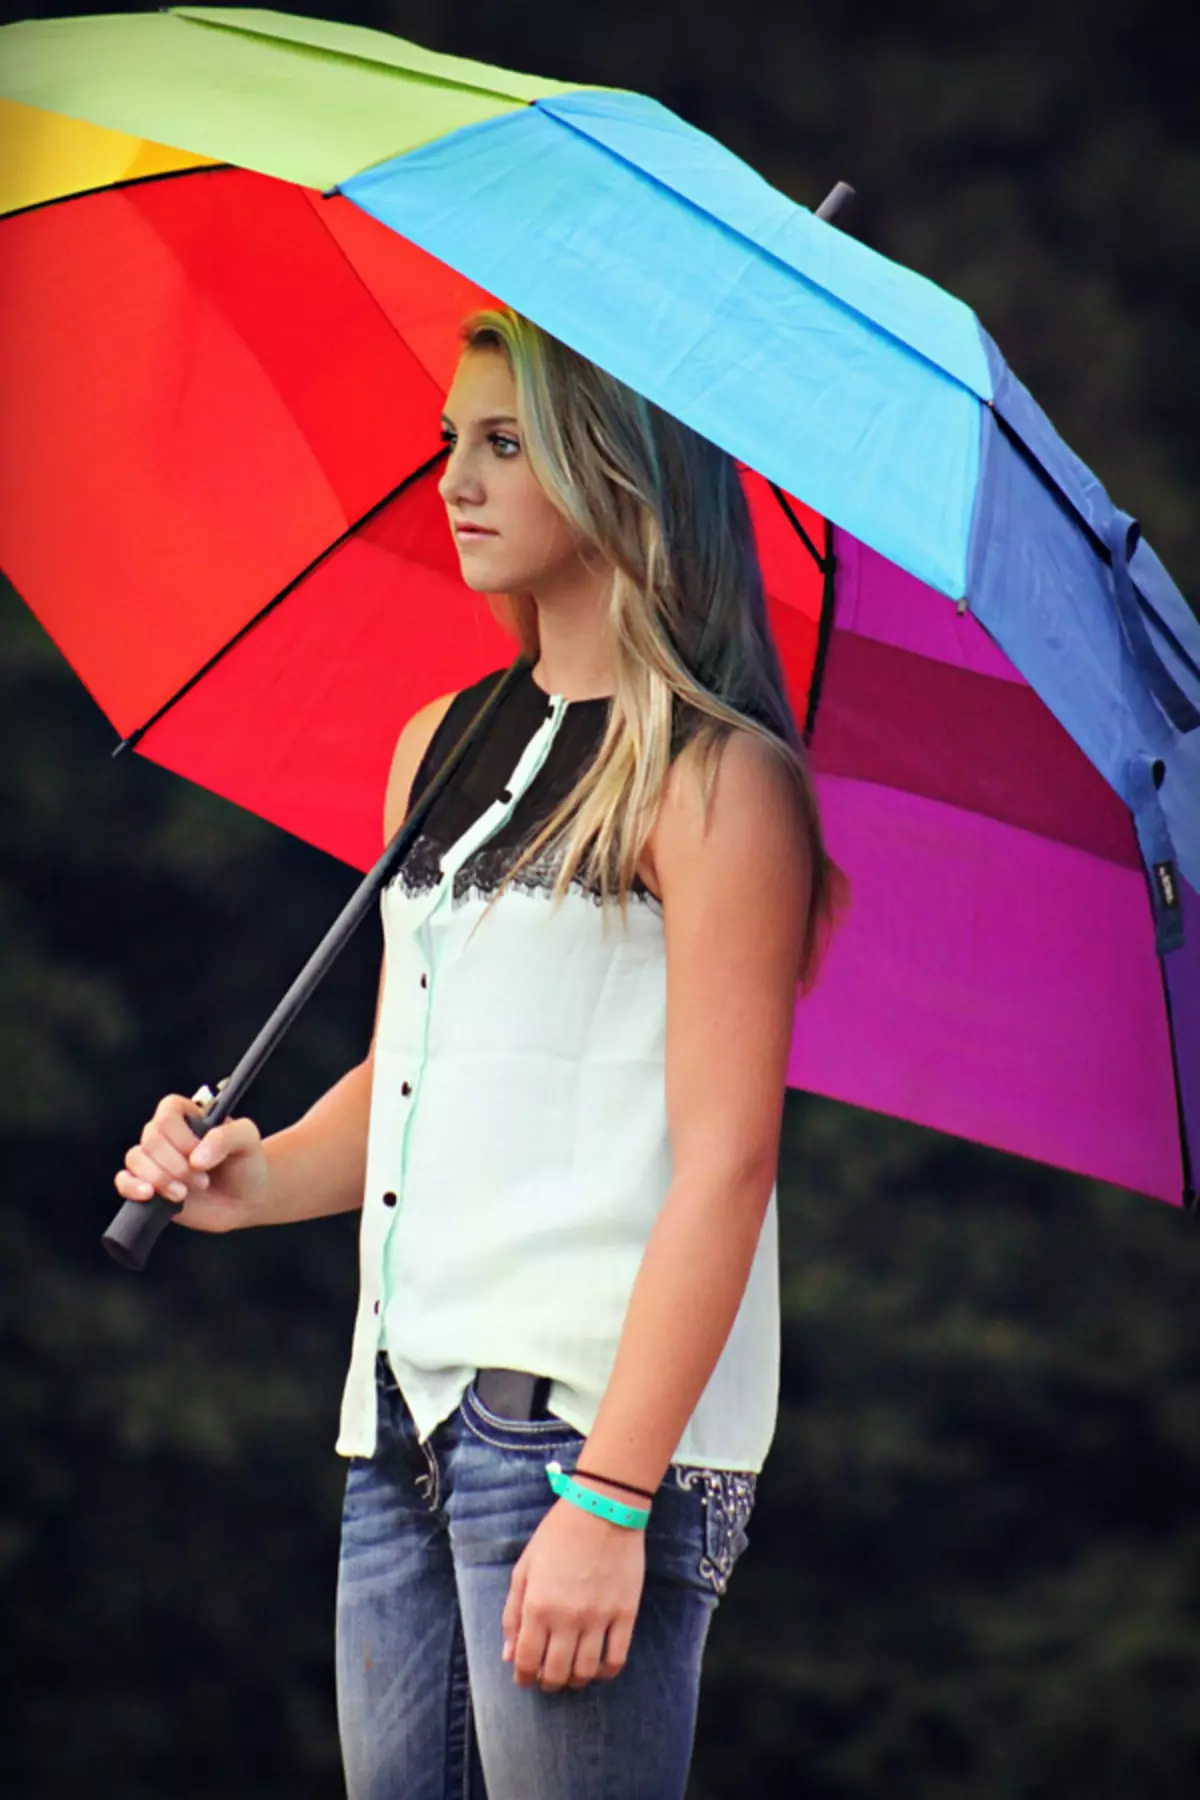 Umbrela de soare (72 poze): Lace de feminin OpenWork Umbrella-Cane 15238_48